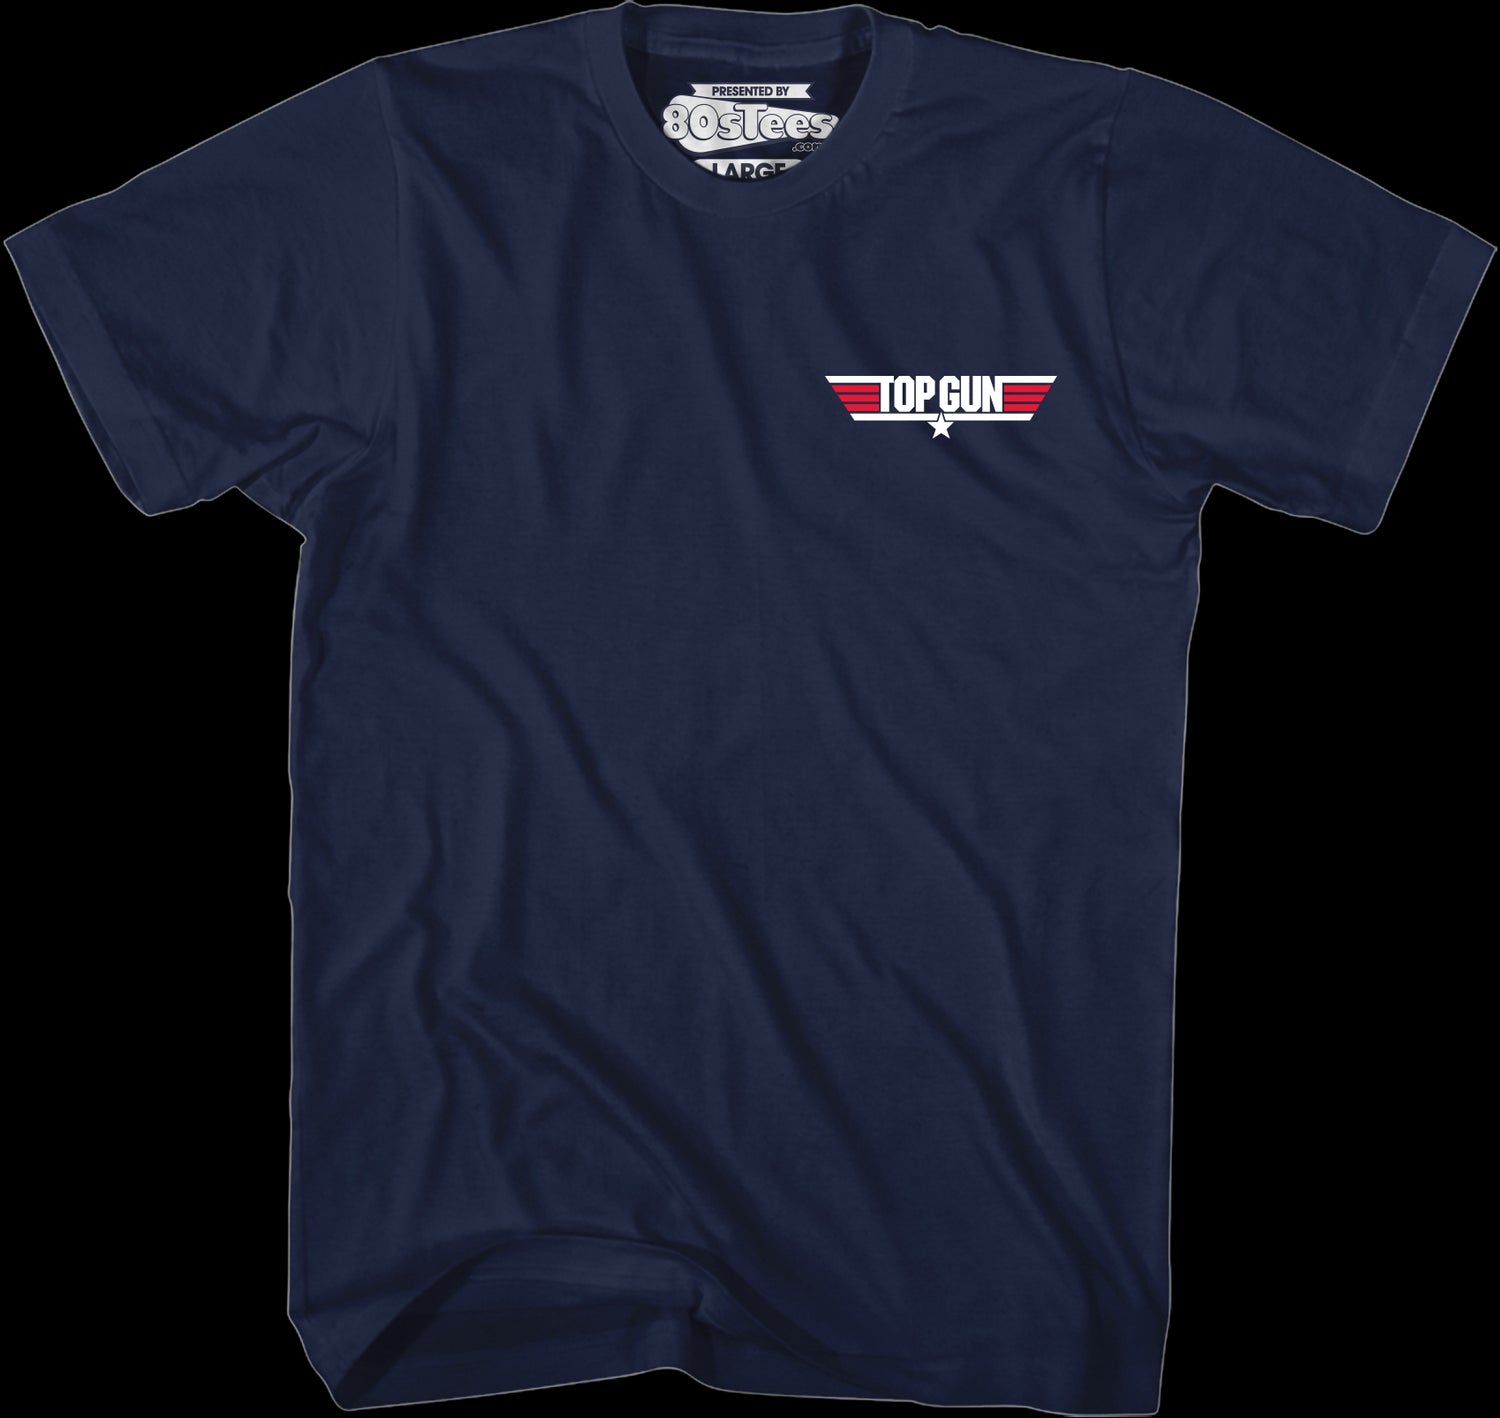 Top Gun Ghostrider T-Shirt: 80s Movies Top Gun T-shirt